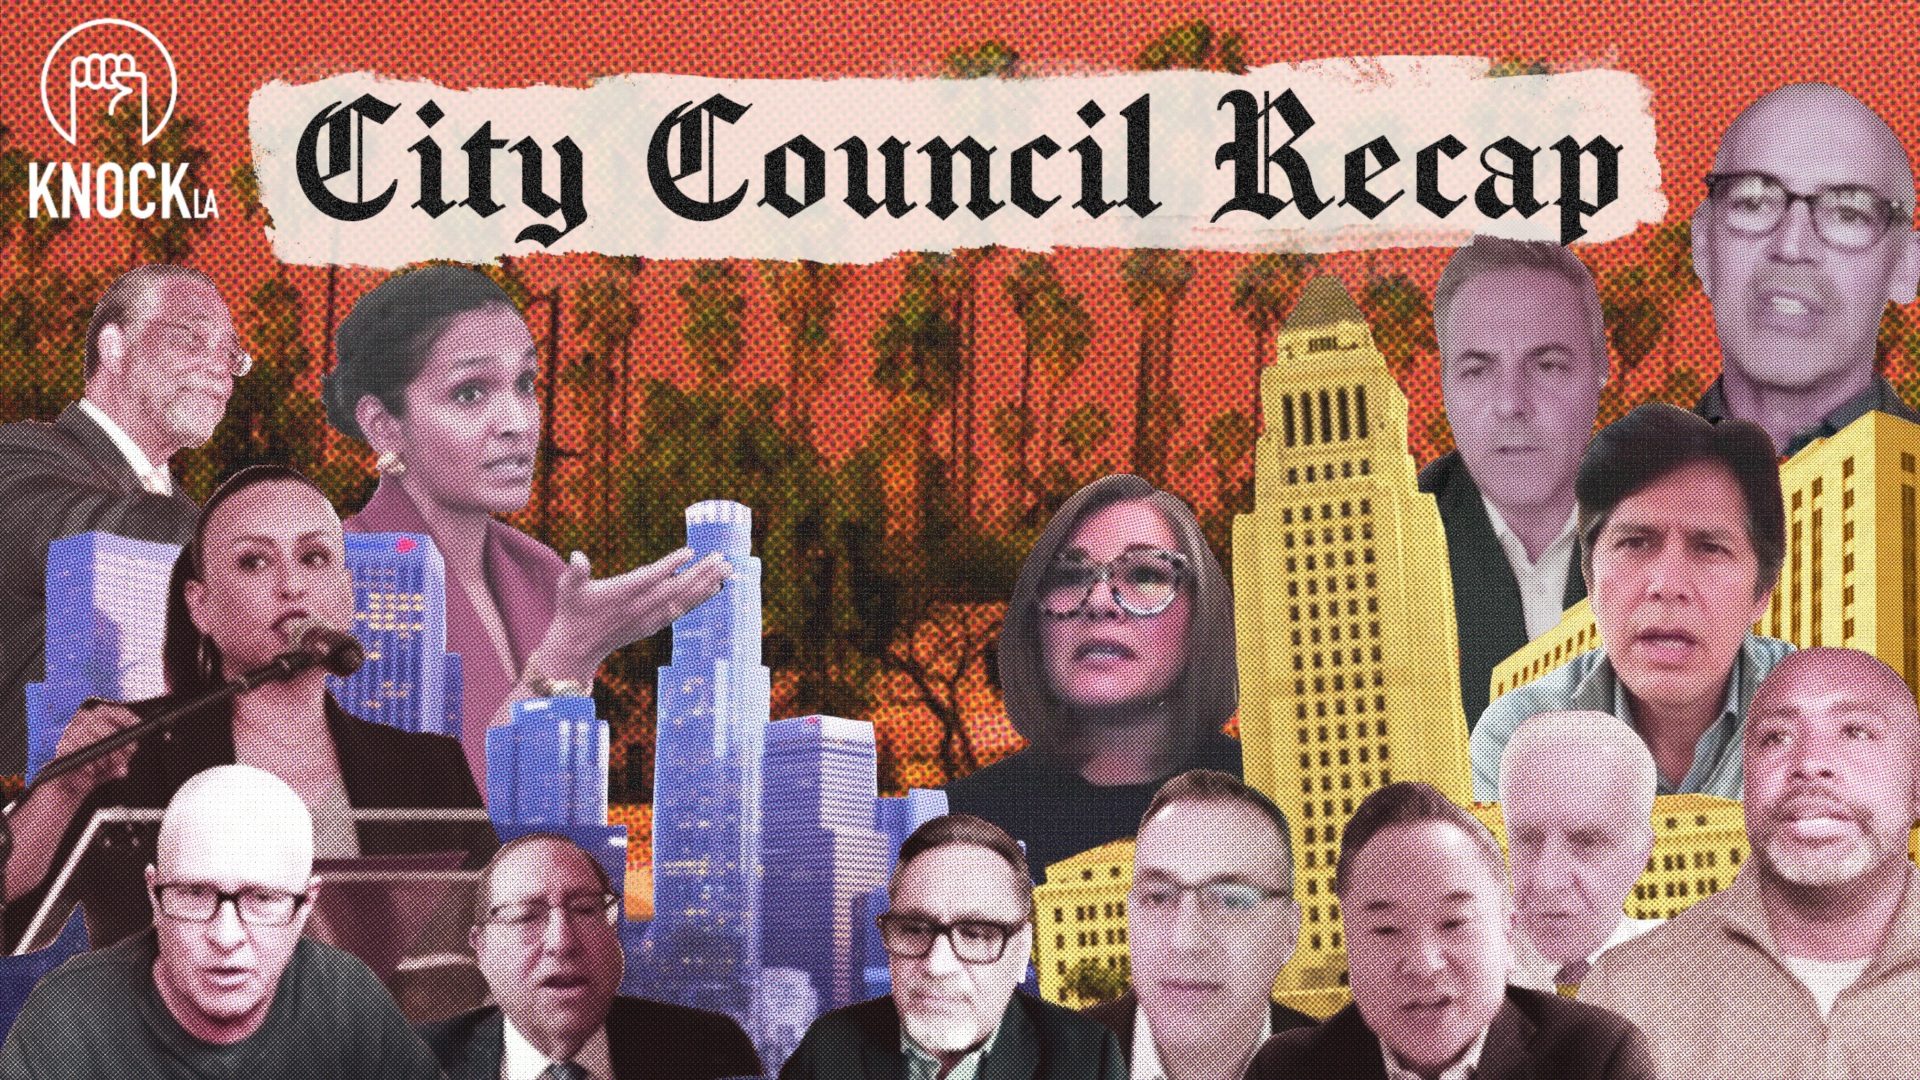 city council recap featured image collage